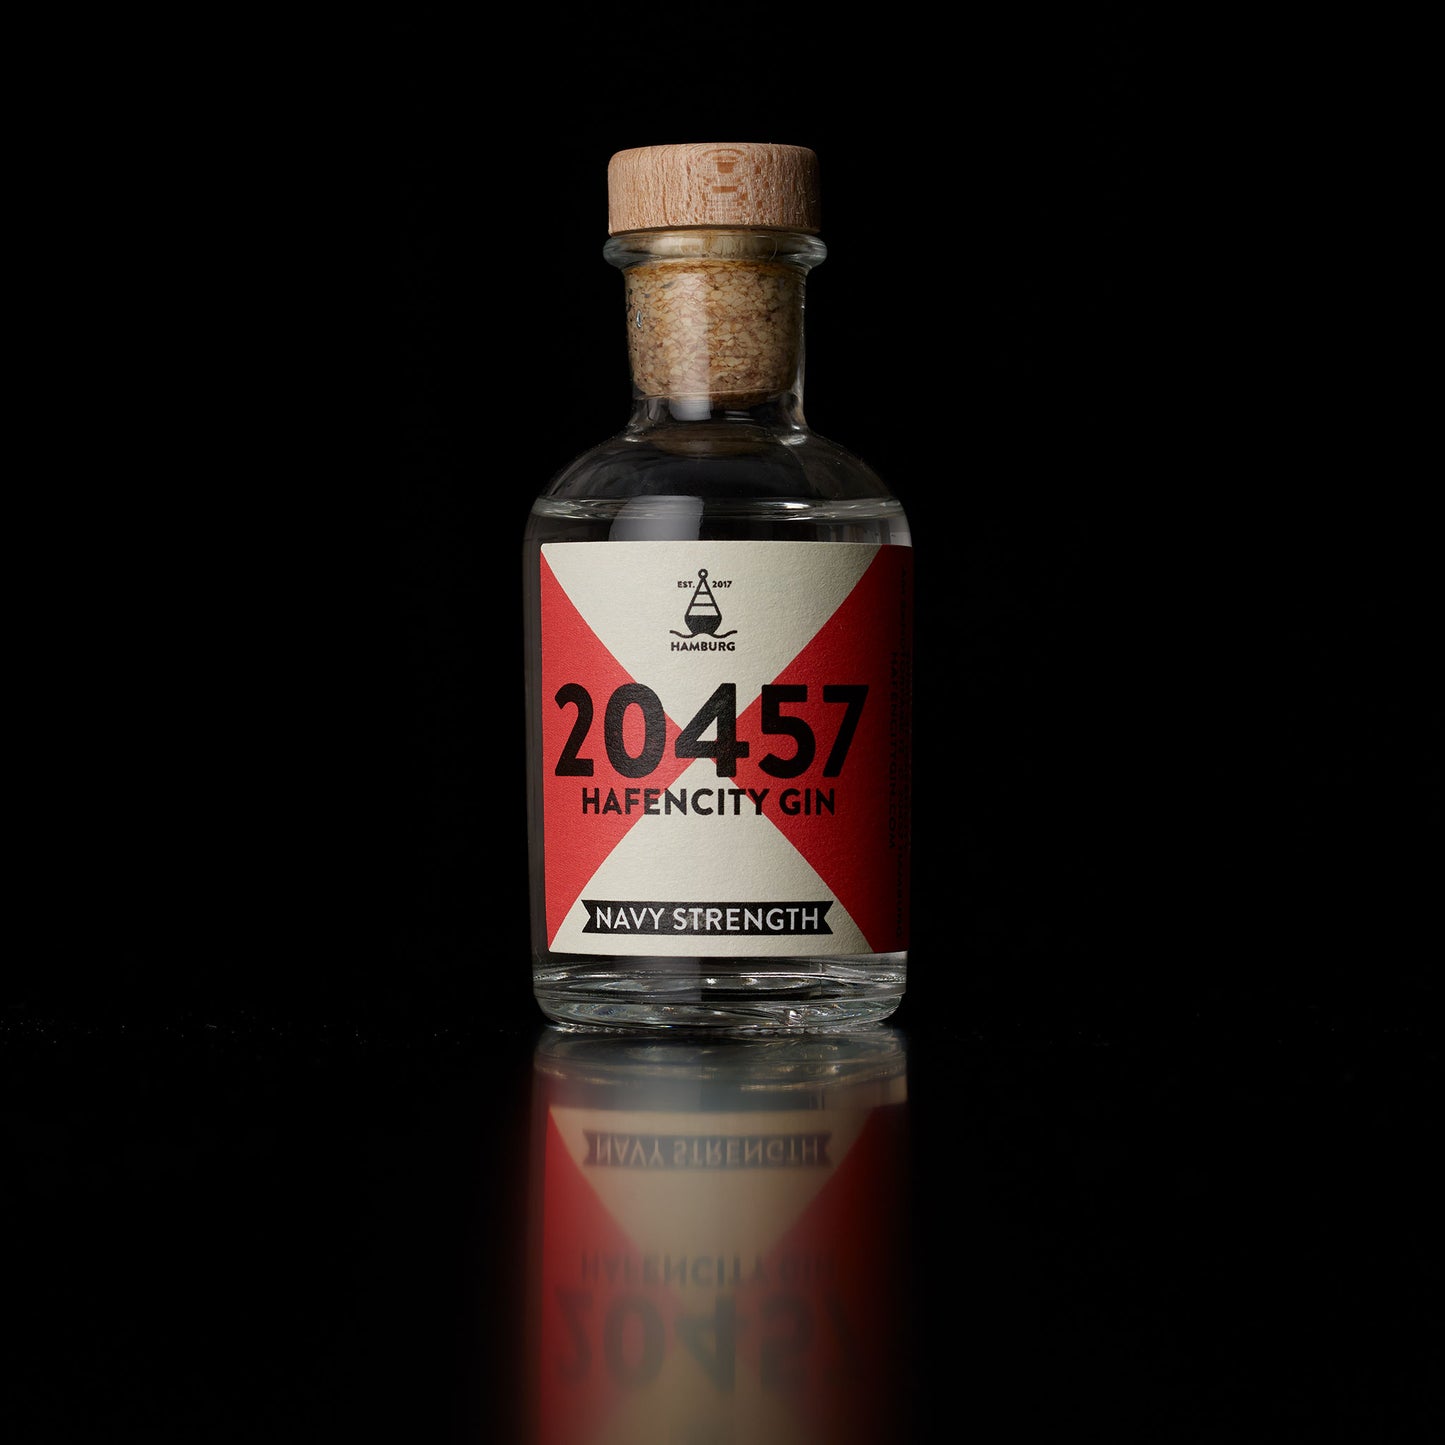 20457 Hafencity Gin Navy Strength 57% Vol. 5CL Miniatur Flasche